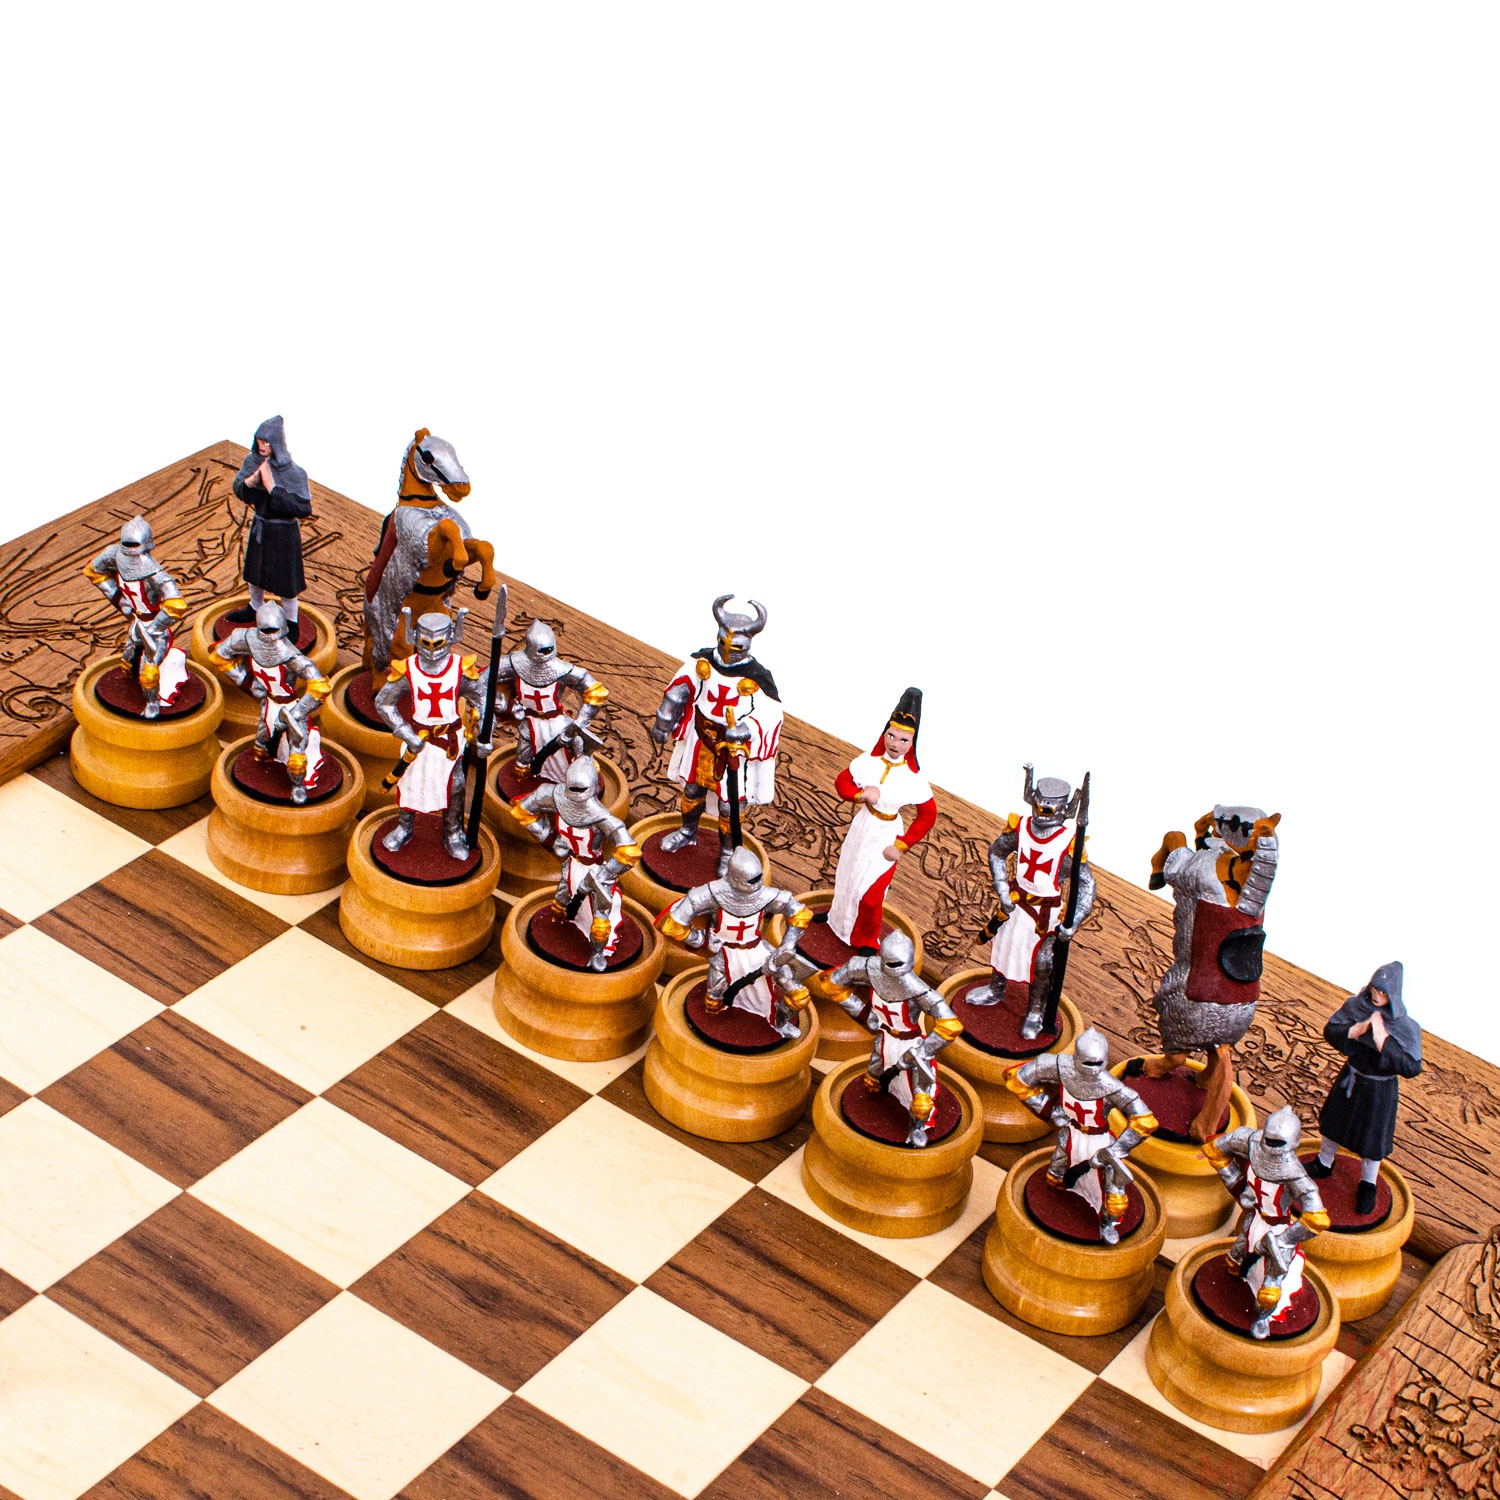 Шахматы "Ледовое побоище" - артикул: RTS54X | Мосподарок 